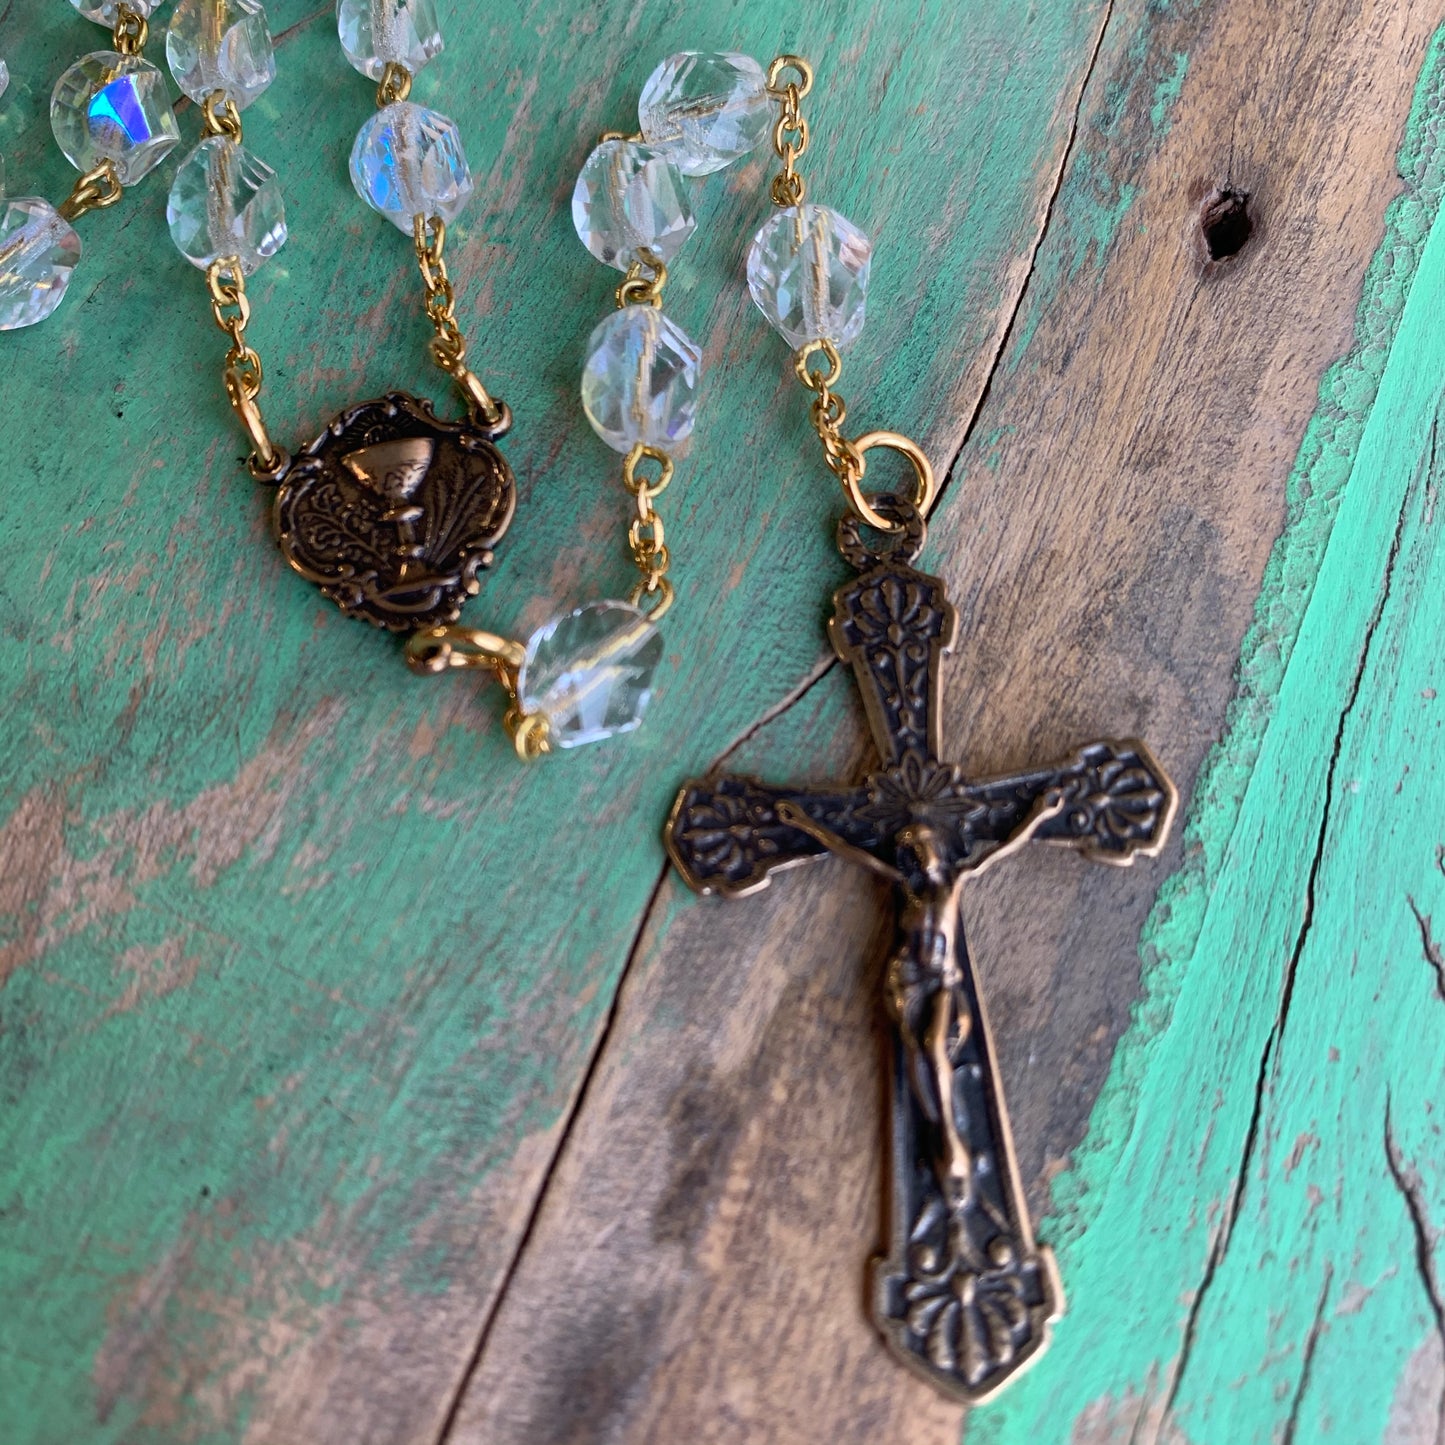 Holy Communion Rosary